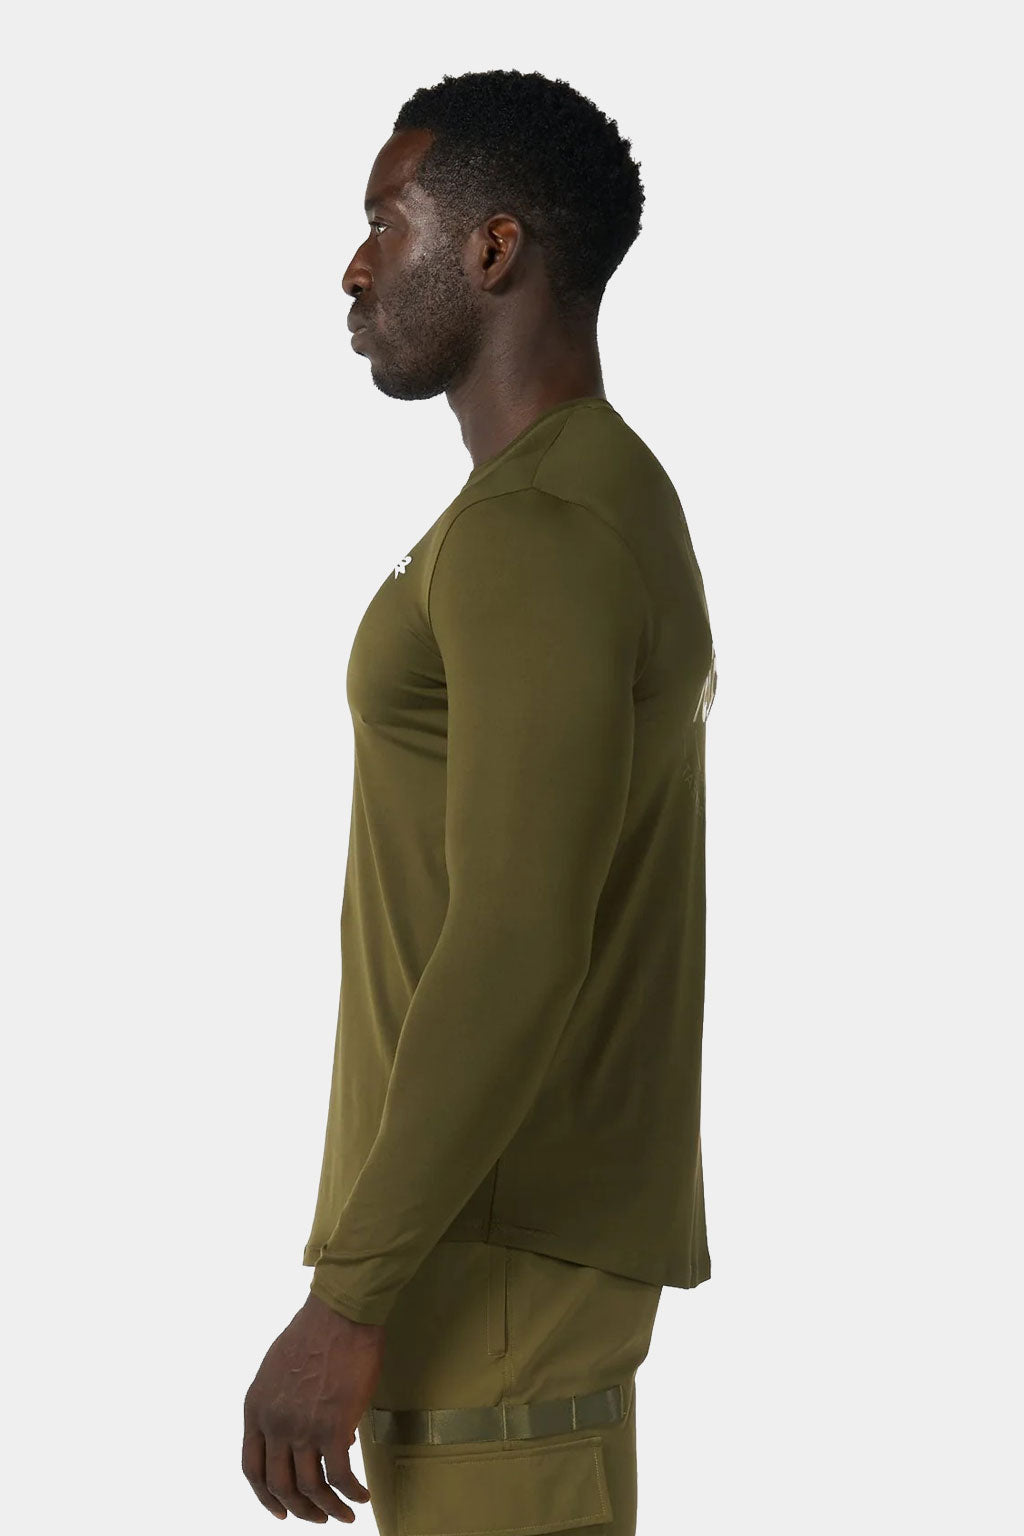 Rzist - Long Sleeve Performance Shirt